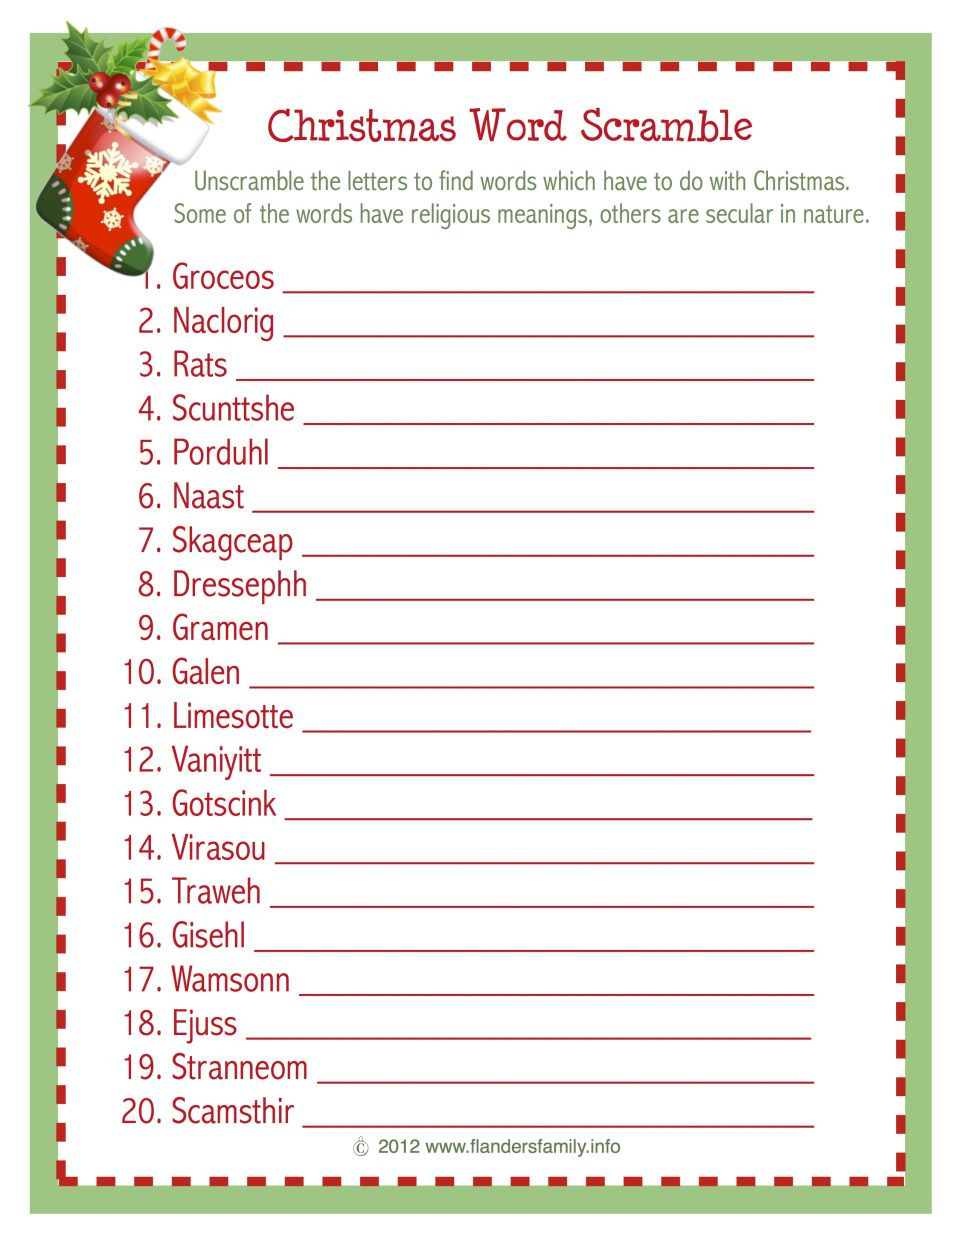 8 Games For Your Christmas Celebration | Christmas Party Games - Free Printable Christmas Word Games